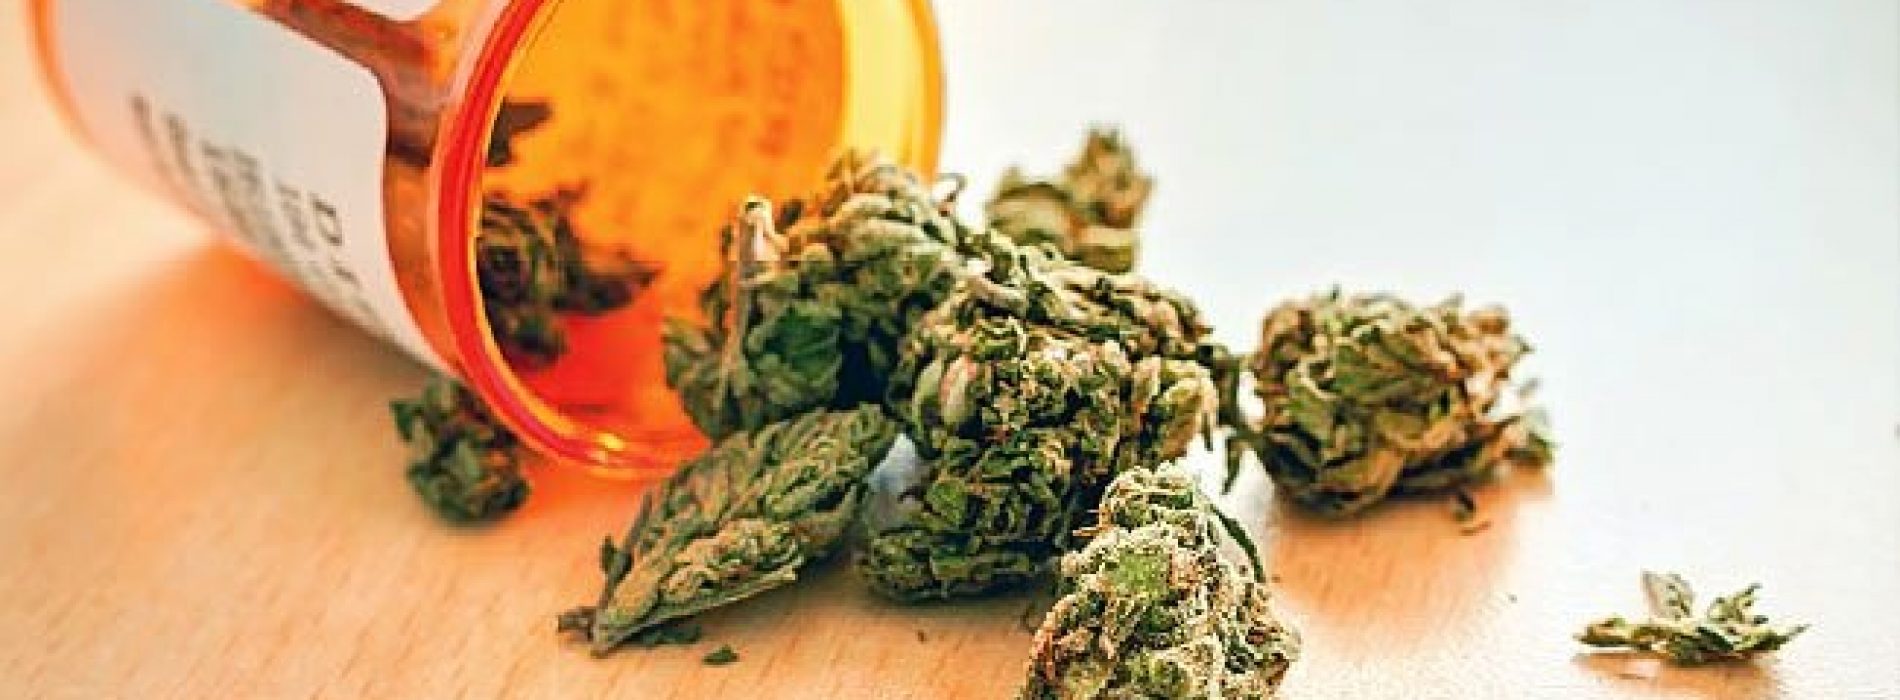 Why Cannabis Has a Lot of Benefits Medicinally